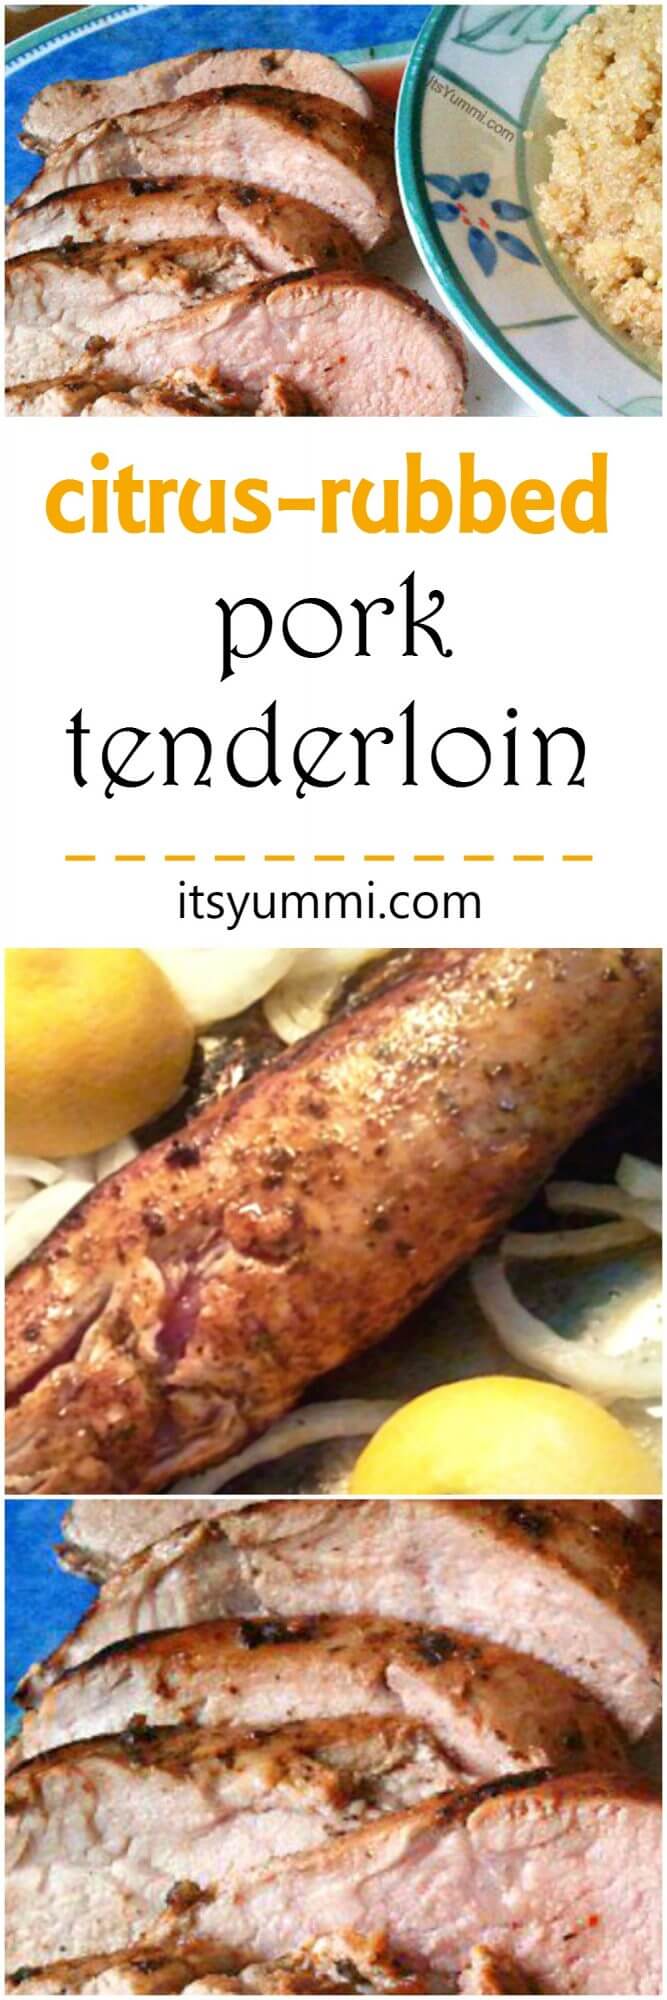 Citrus Rubbed Boneless Pork Tenderloin - Learn how to cook a boneless pork tenderloin PERFECTLY, every time! - Tips and recipe are on itsyummi.com